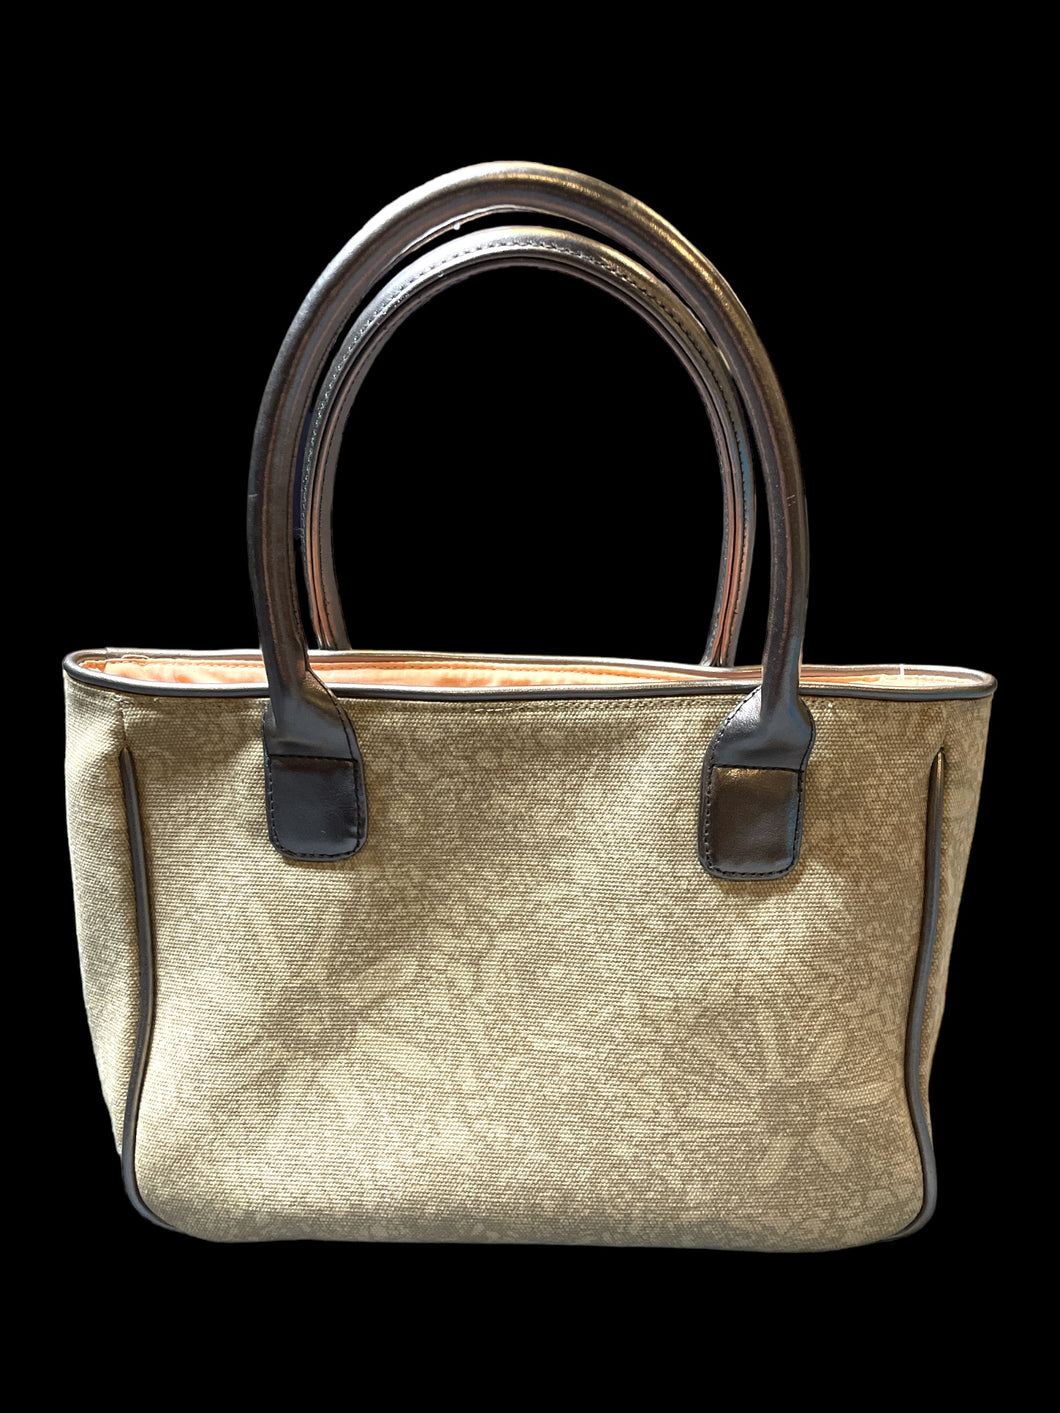 Beige Victoria's Secret floral pattern purse w/ metallic-like handles